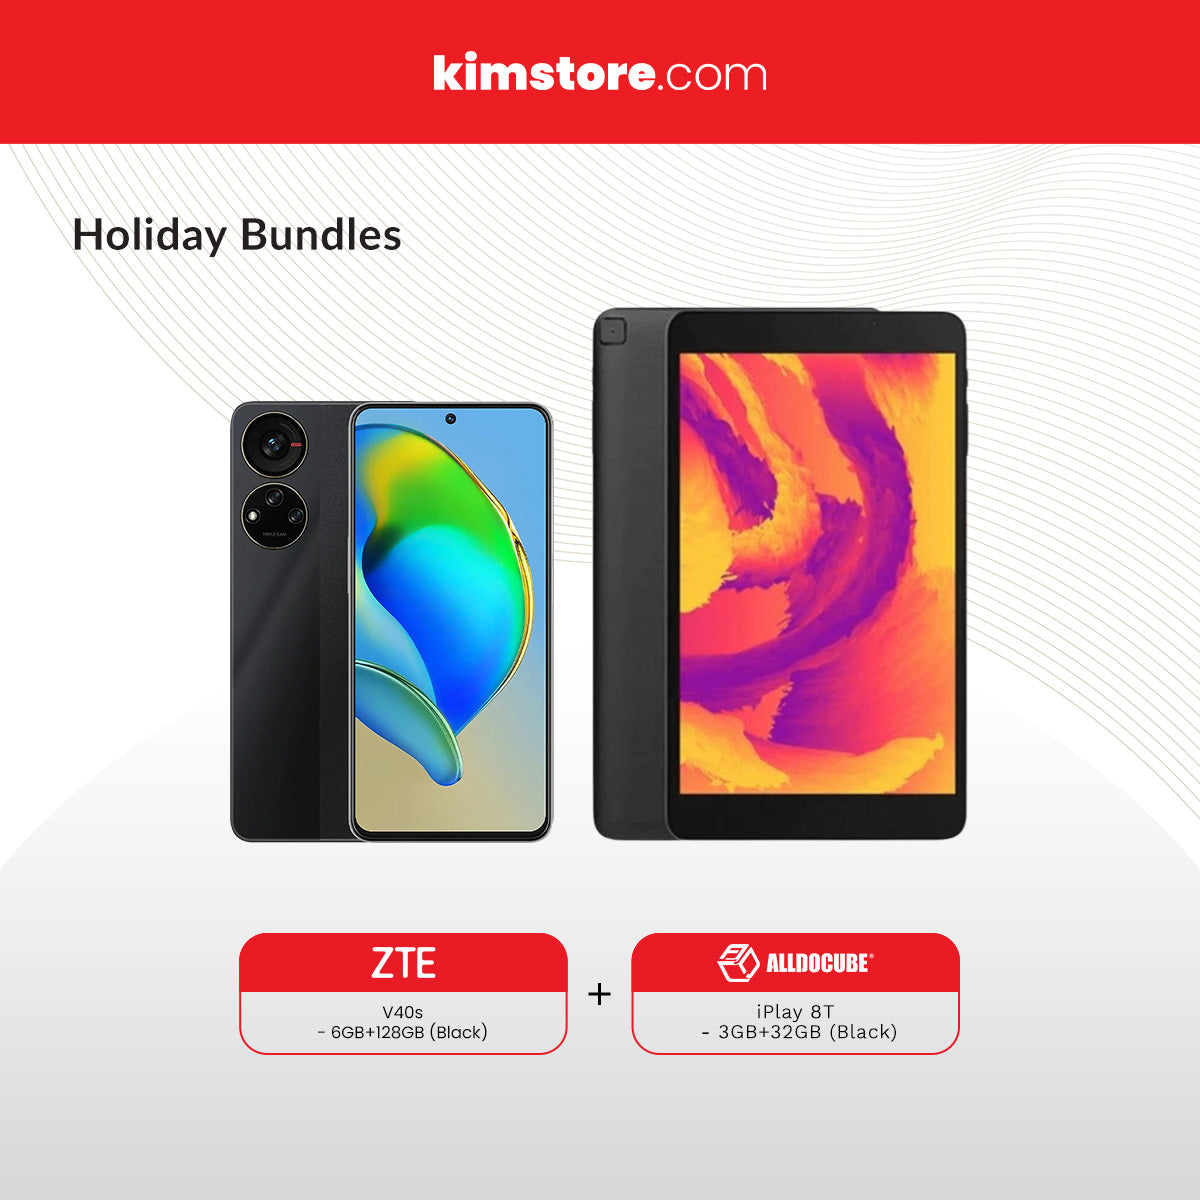 Holiday Bundle: ZTE V40s (6GB/128GB) and Alldocube iPlay 8T T802 3+32GB Tablet